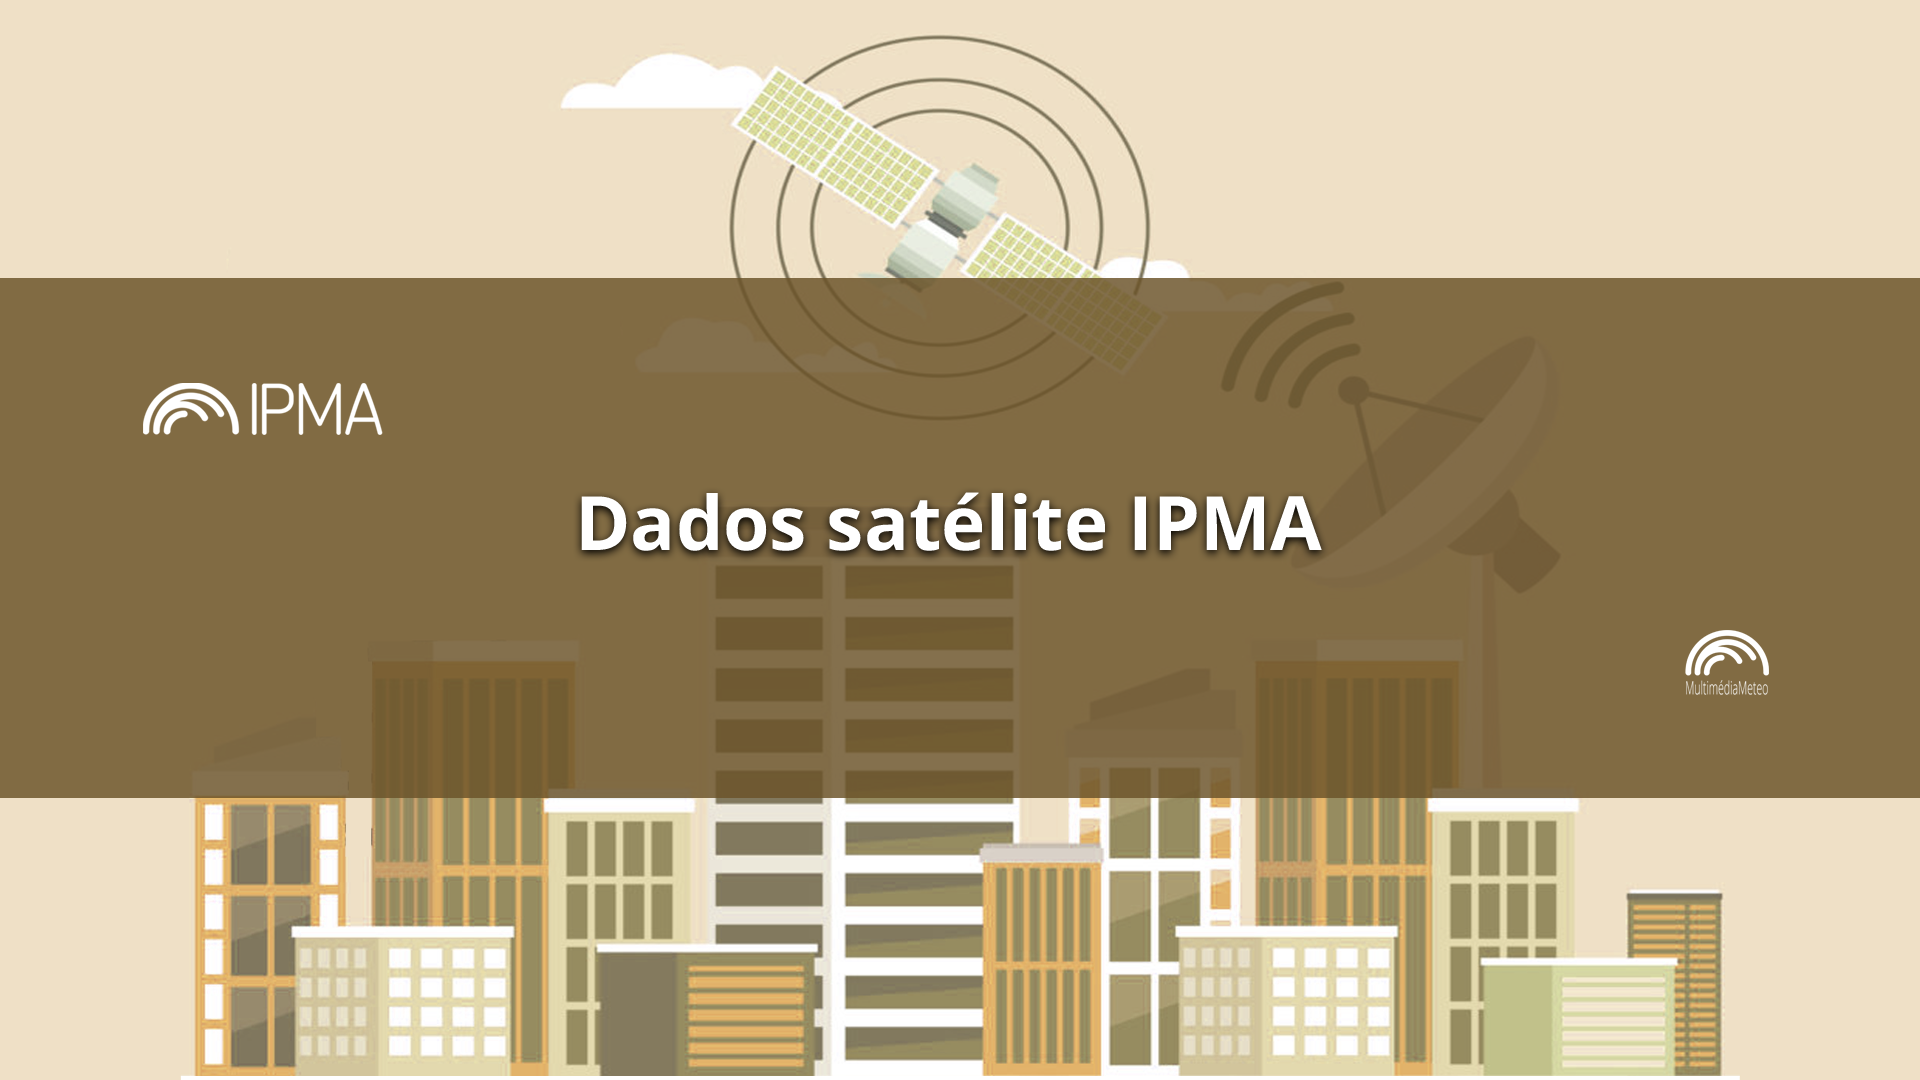  Dados satélite IPMA 14-02-2022